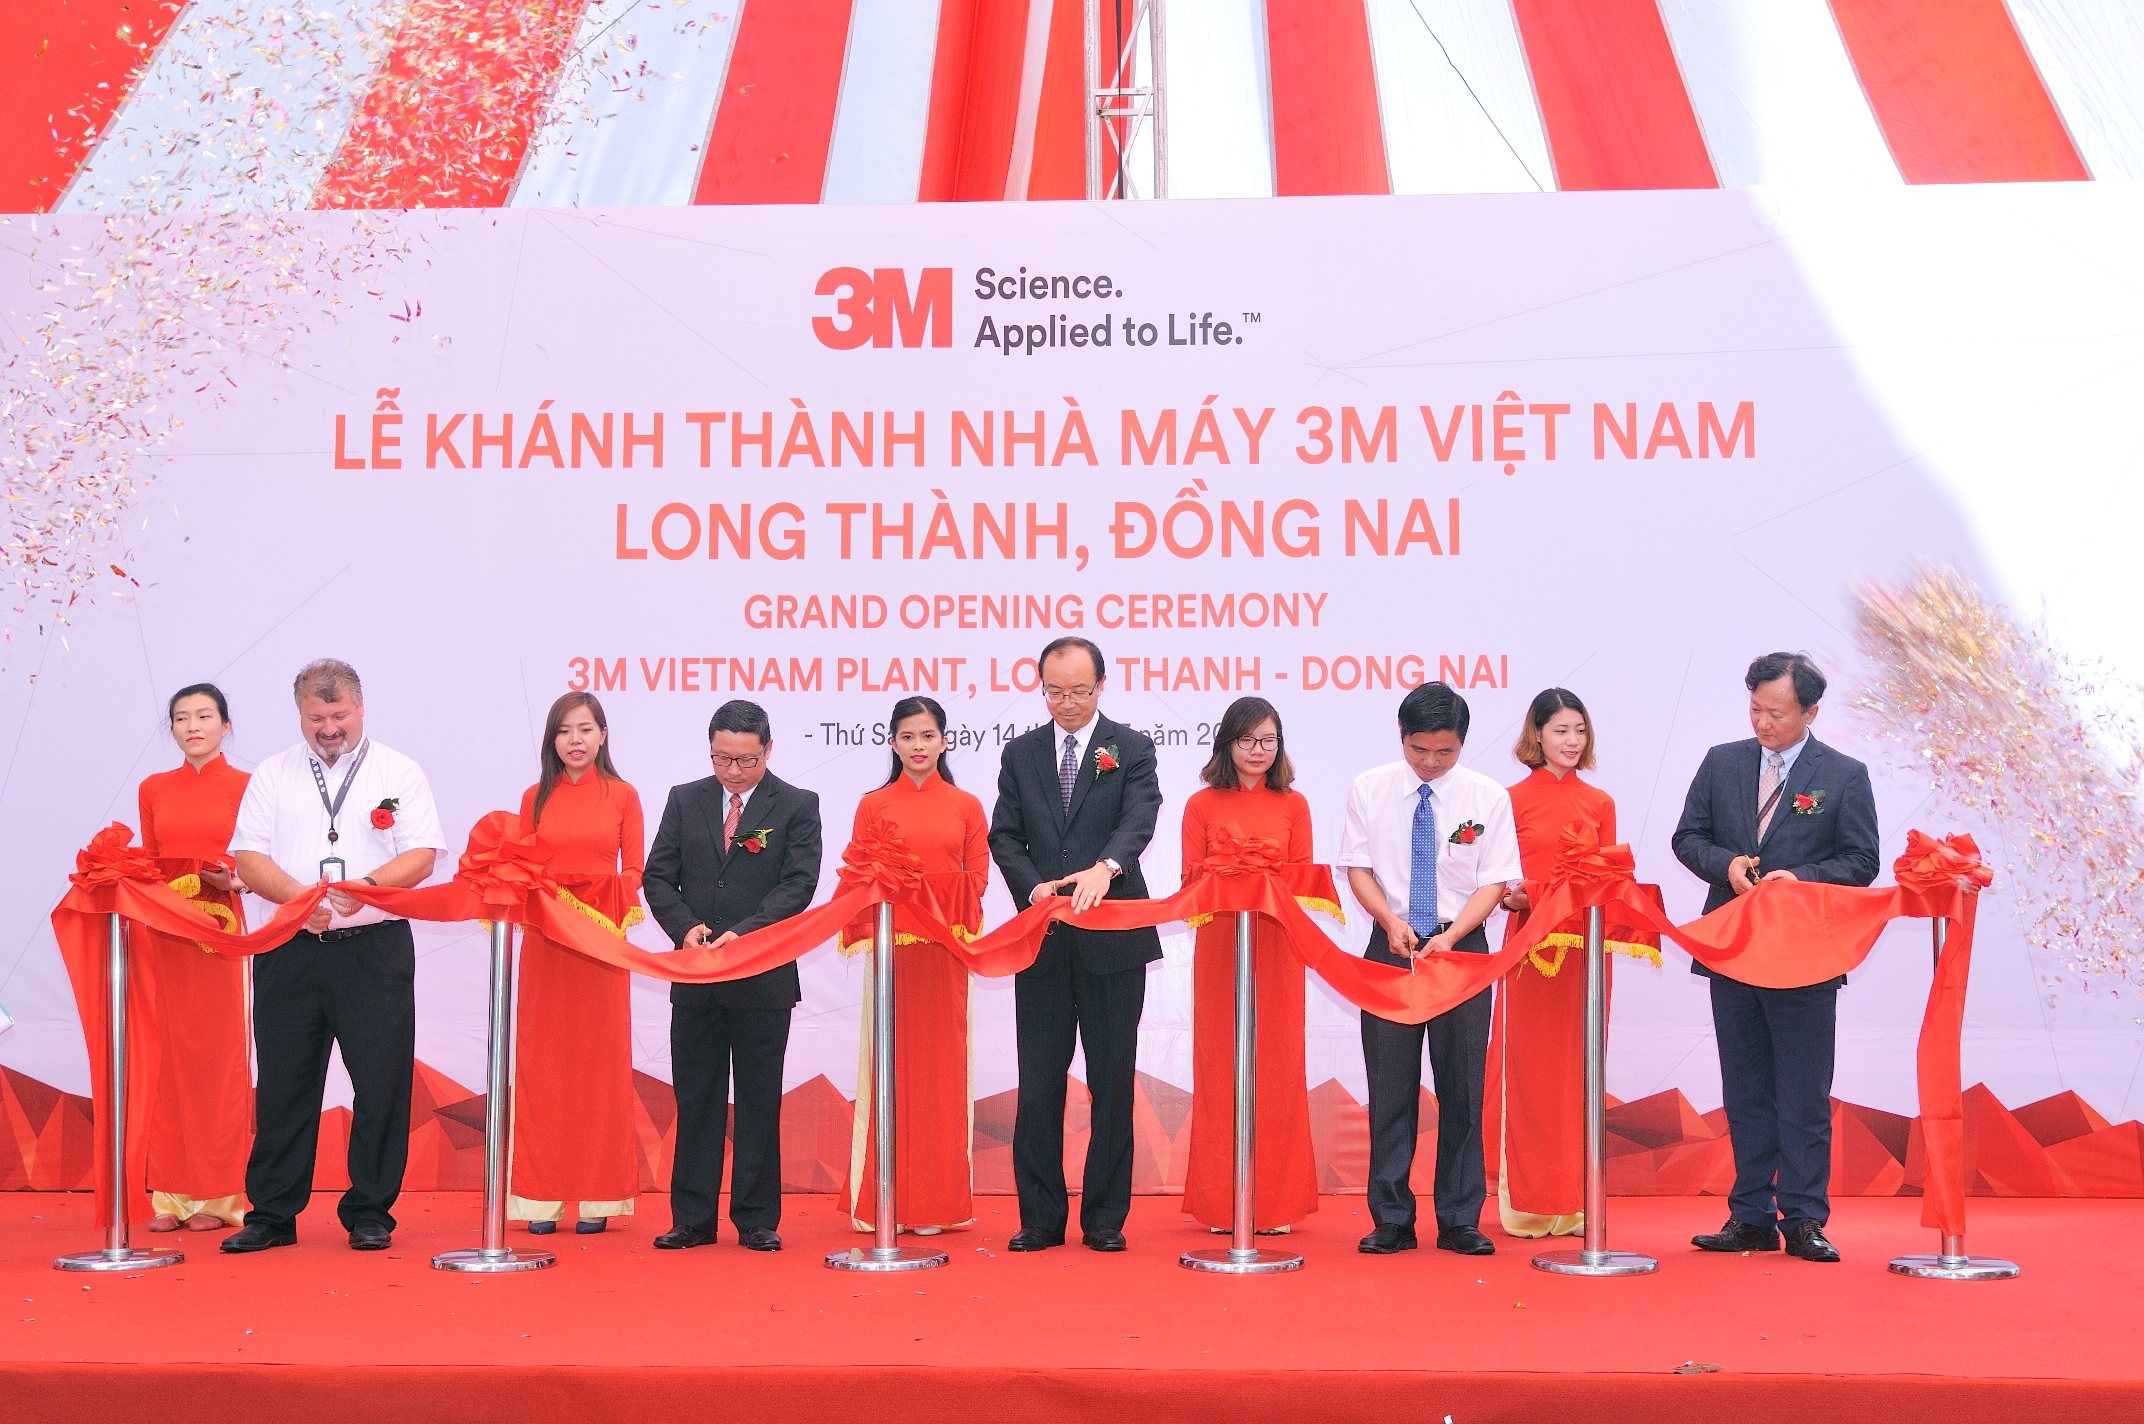 3M Vietnam inaugurates new plant in Dong Nai